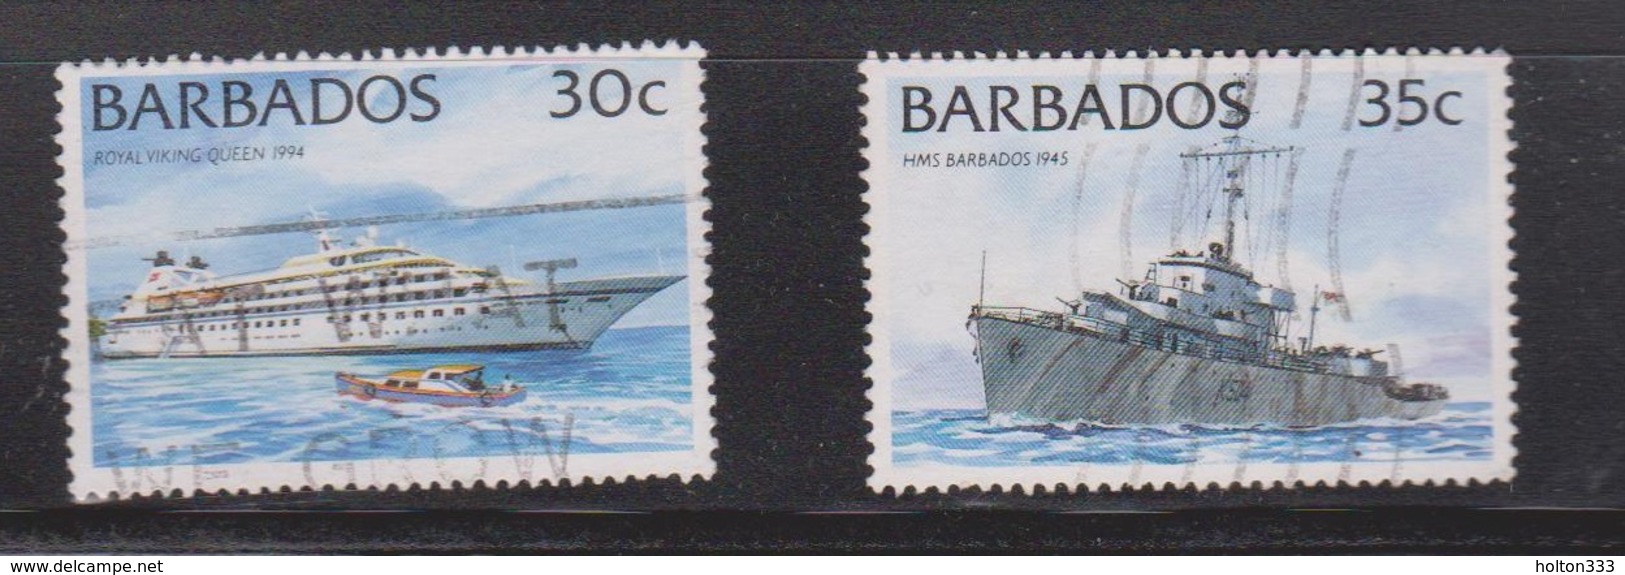 BARBADOS Scott # 875-6 Used - Ships - Barbados (1966-...)